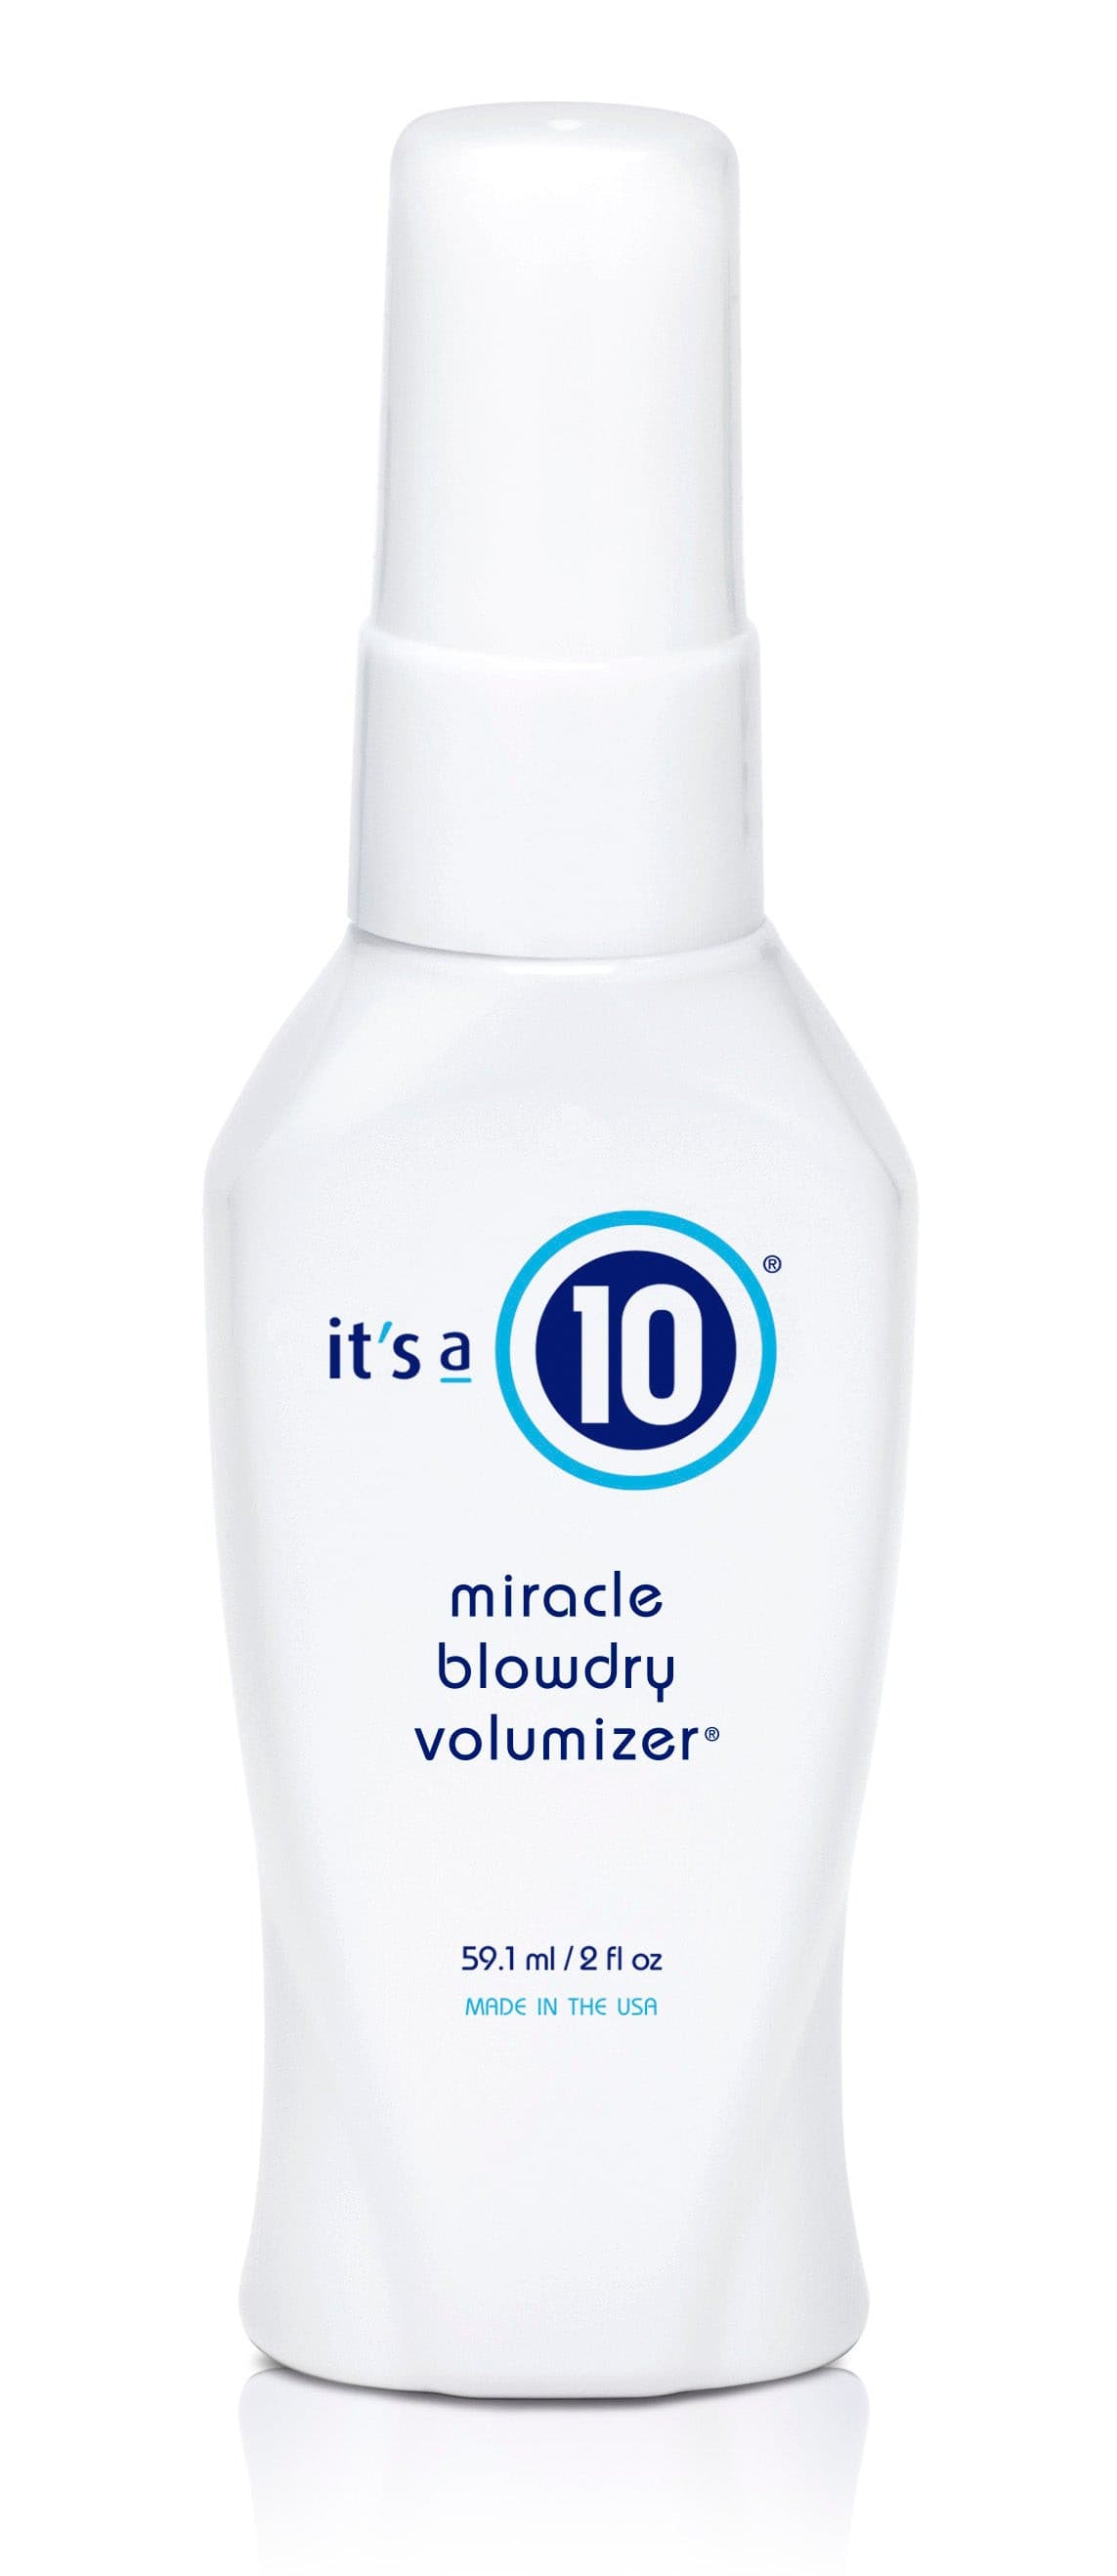 It's A 10 Miracle Shine Spray - 4 fl oz bottle